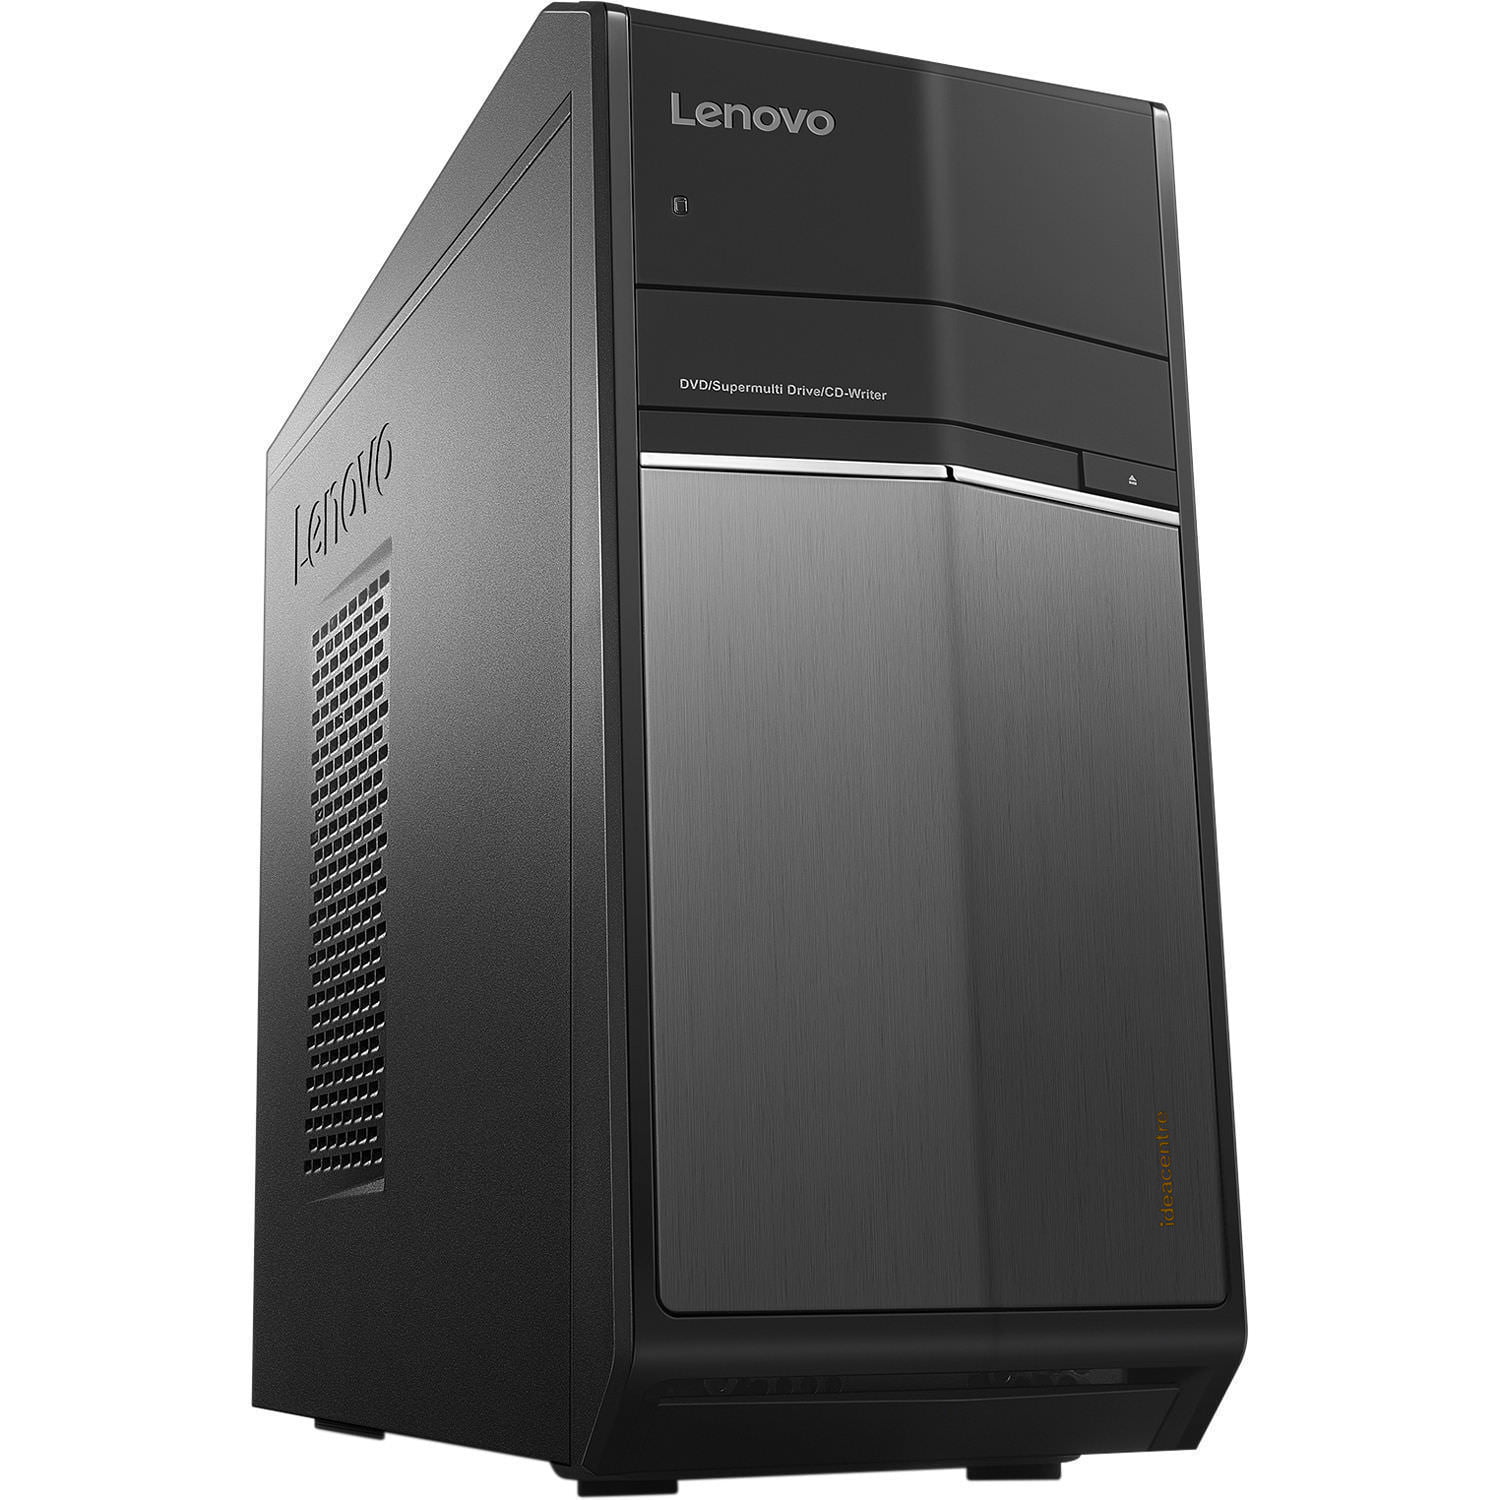 Lenovo Ideacentre 710 Desktop (Intel Core i7-6700, 12GB DDR3 SDRAM, 1TB HDD, 2000, Windows 10